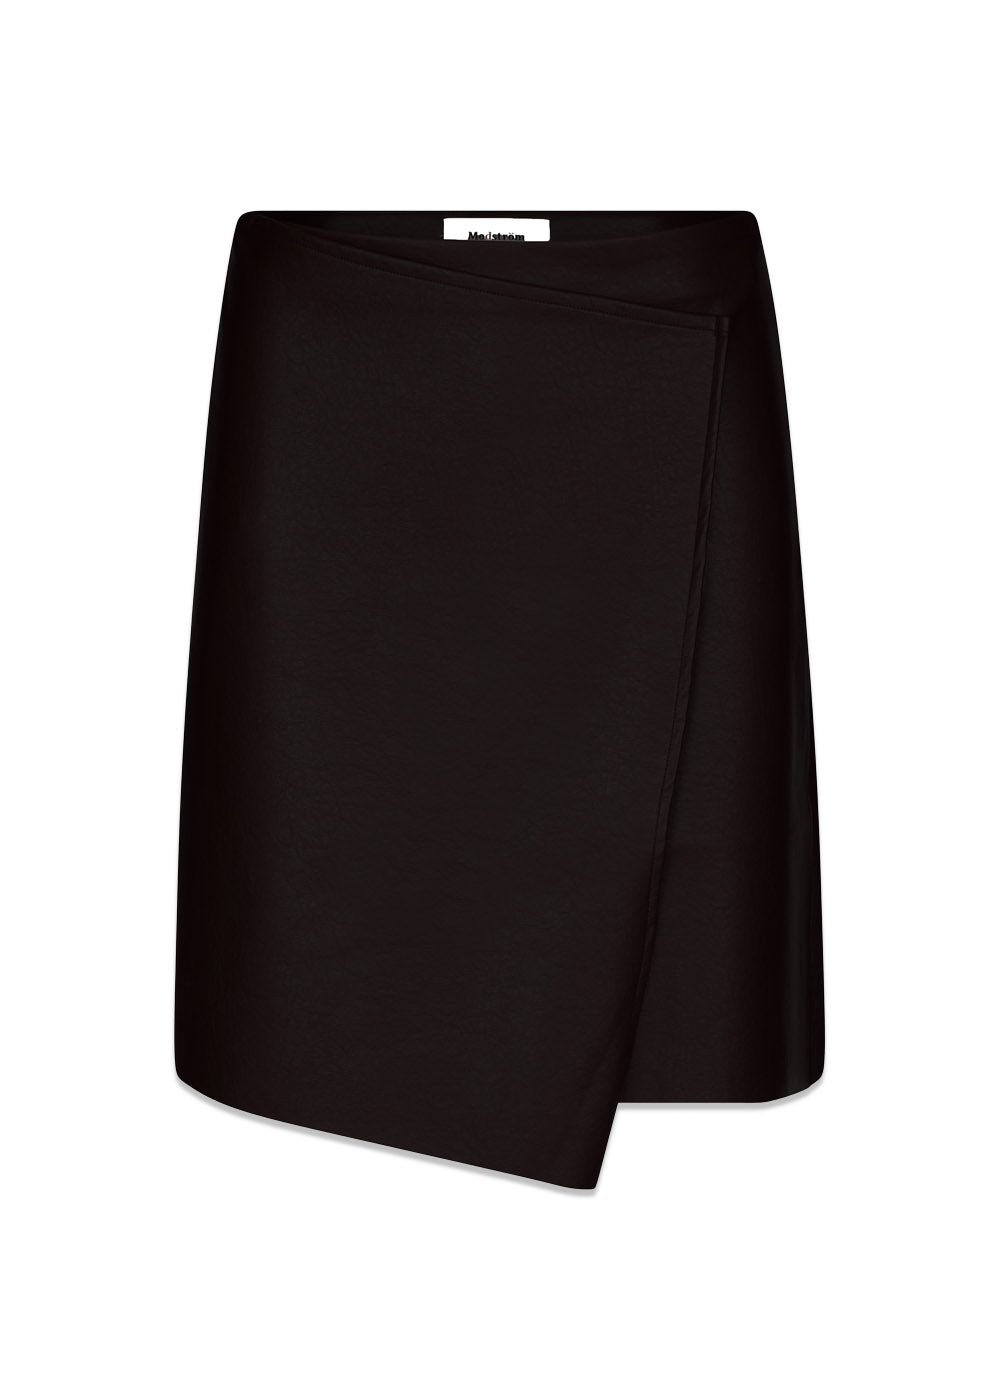 HuxleyMD skirt - Black